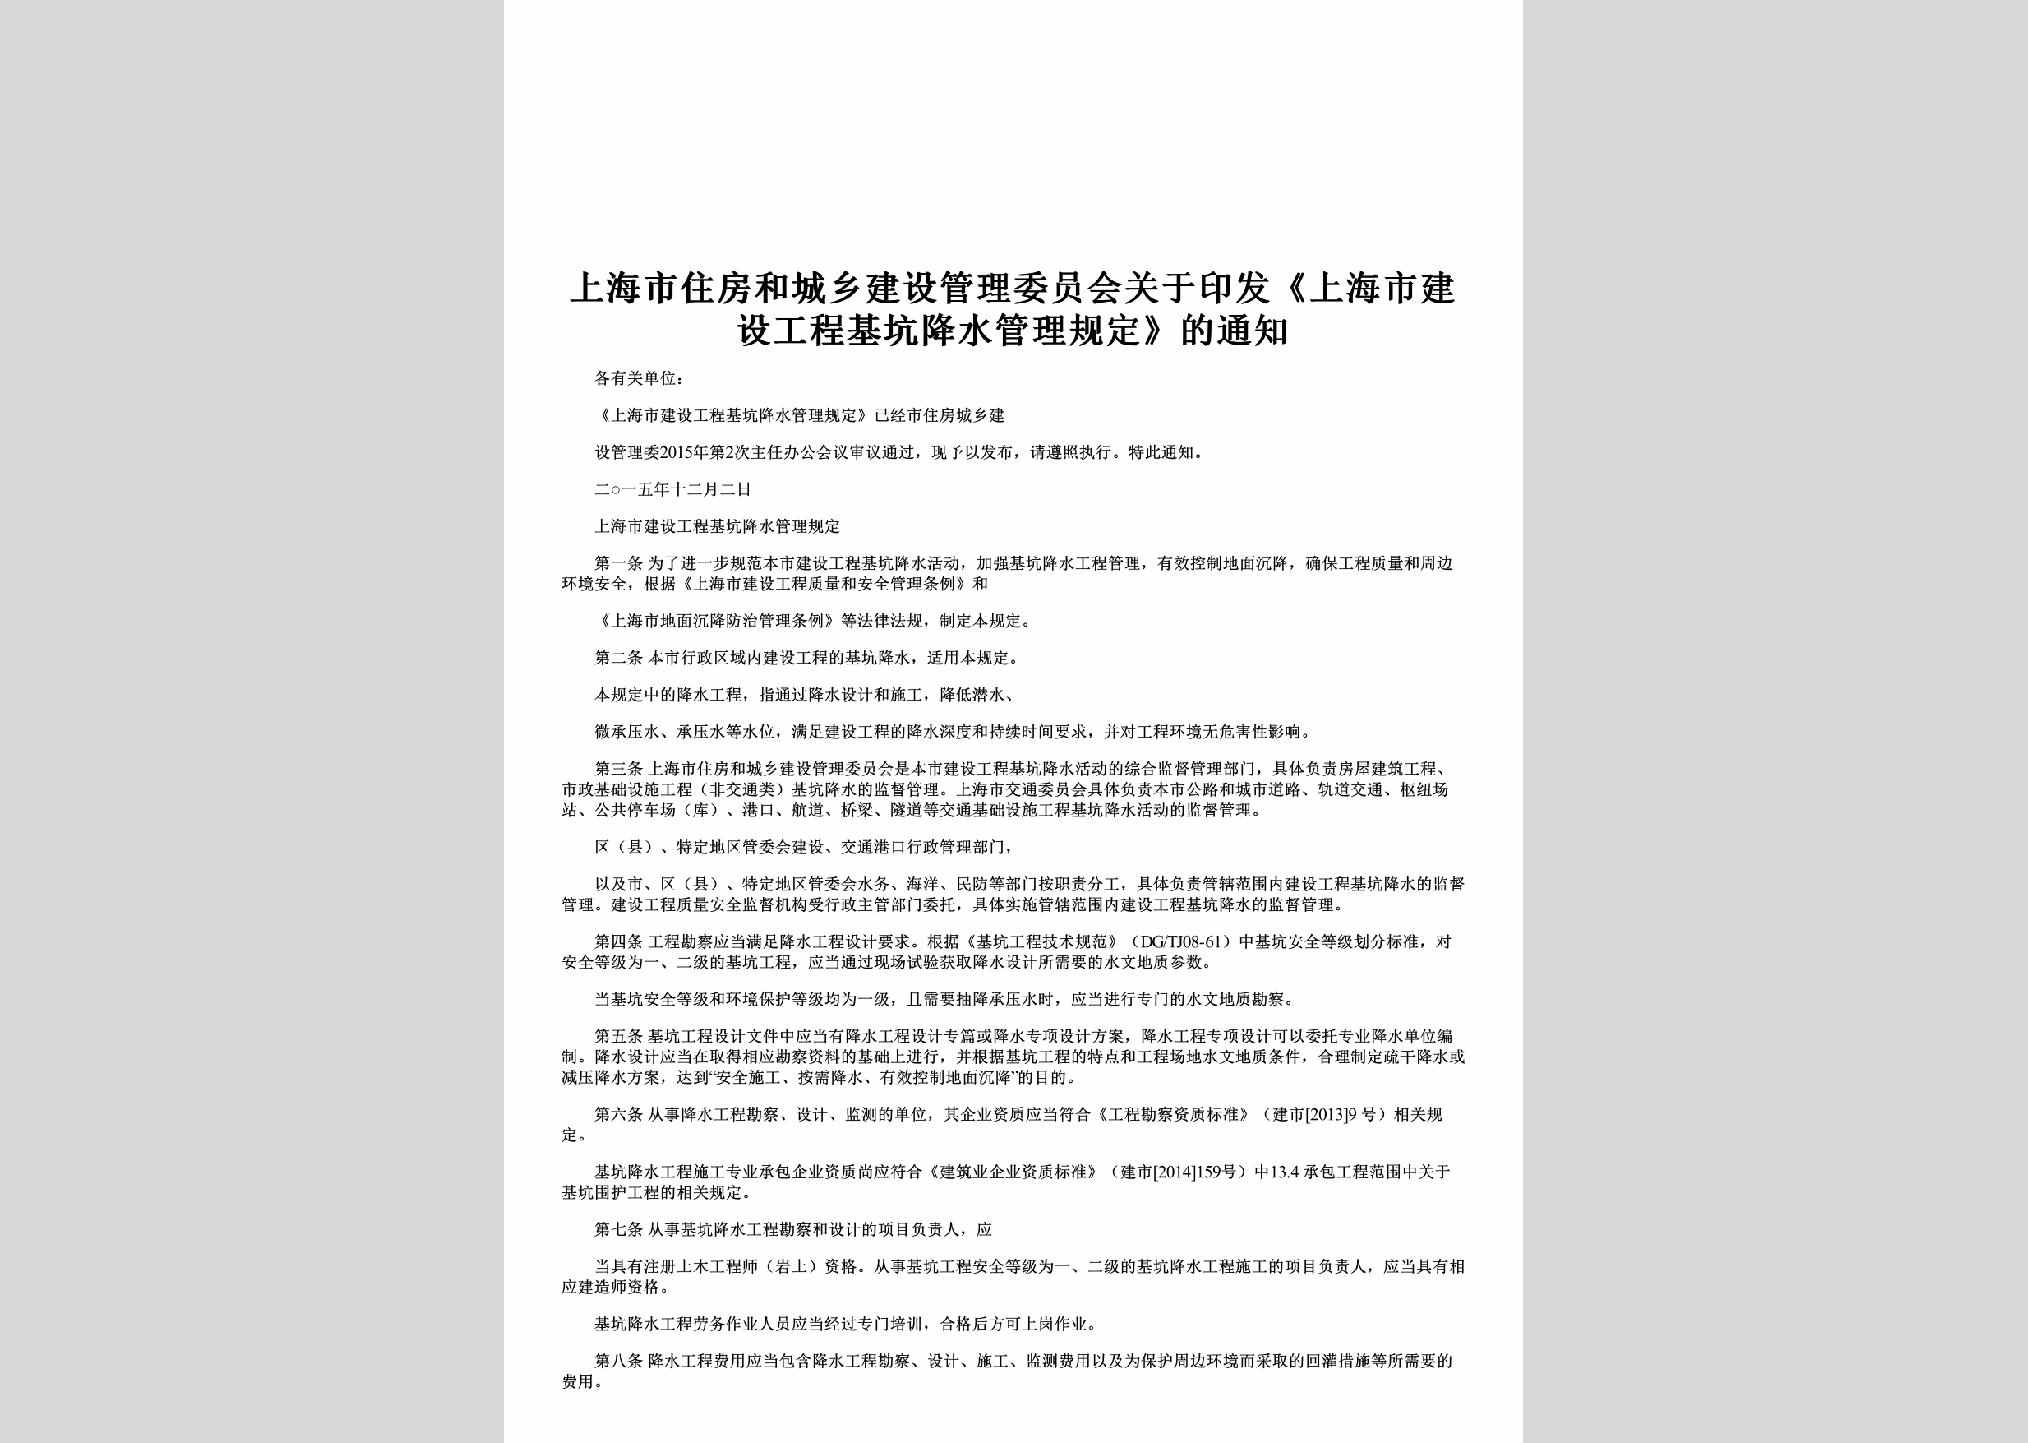 SH-GCJSGLBF-2015：关于印发《上海市建设工程基坑降水管理规定》的通知